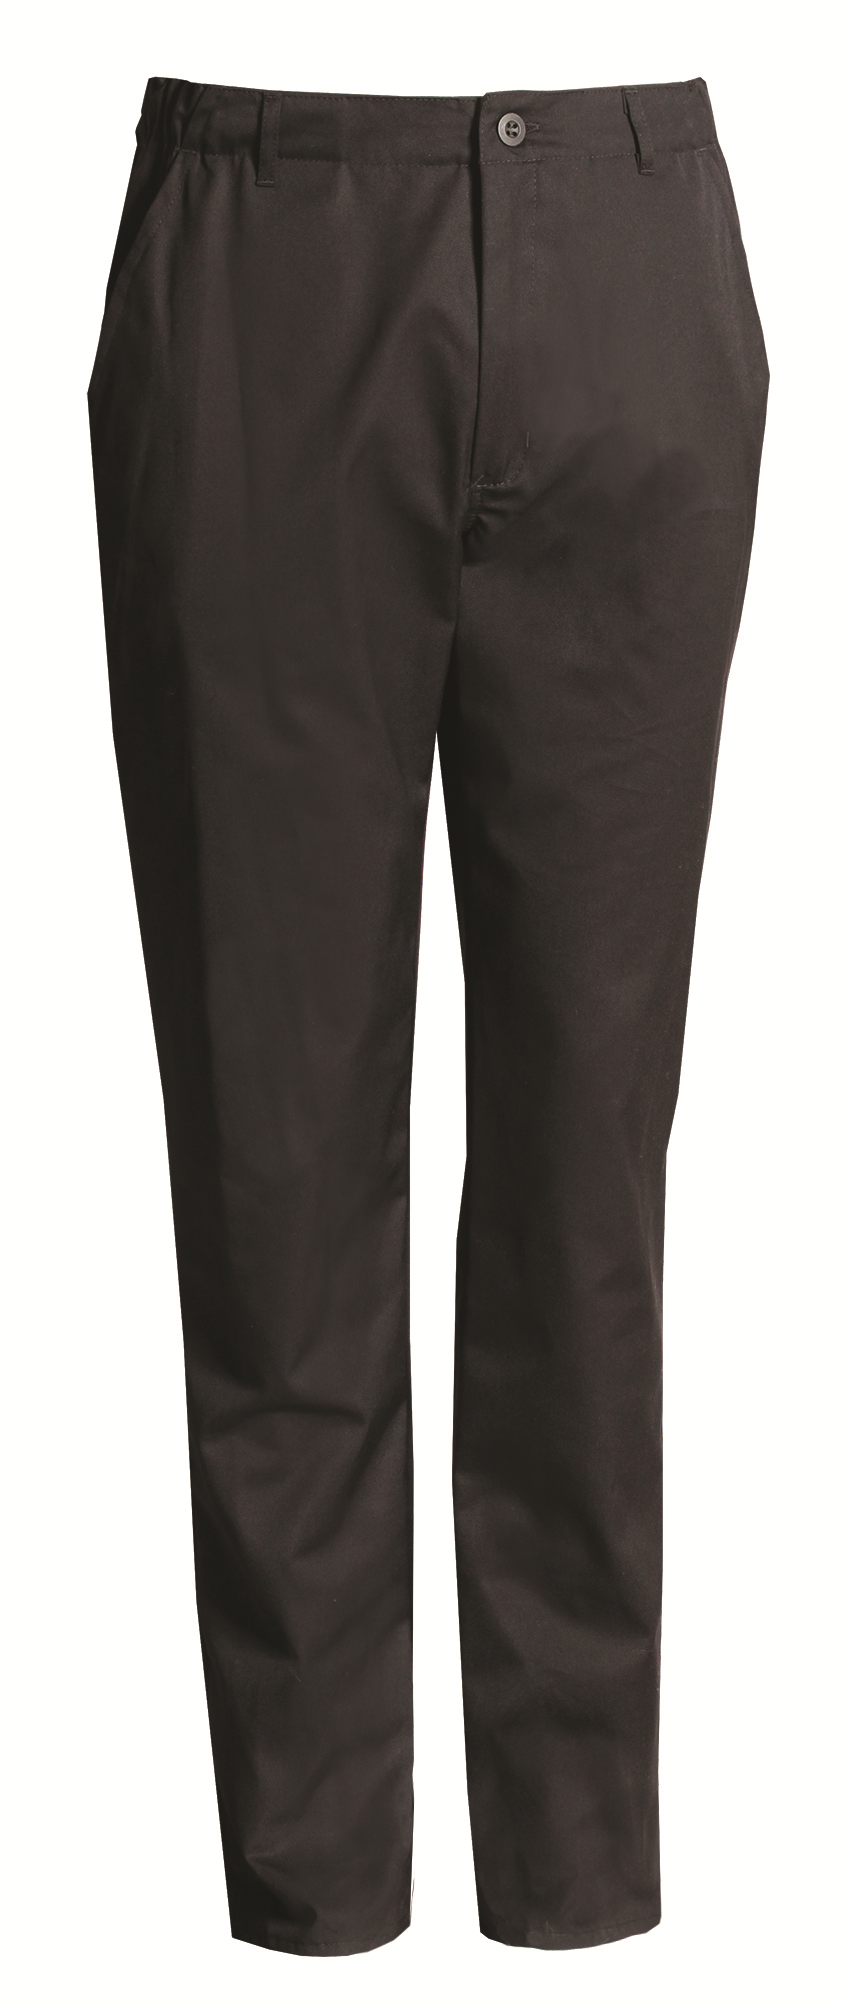 Unisex trousers, Take Away (5050379)